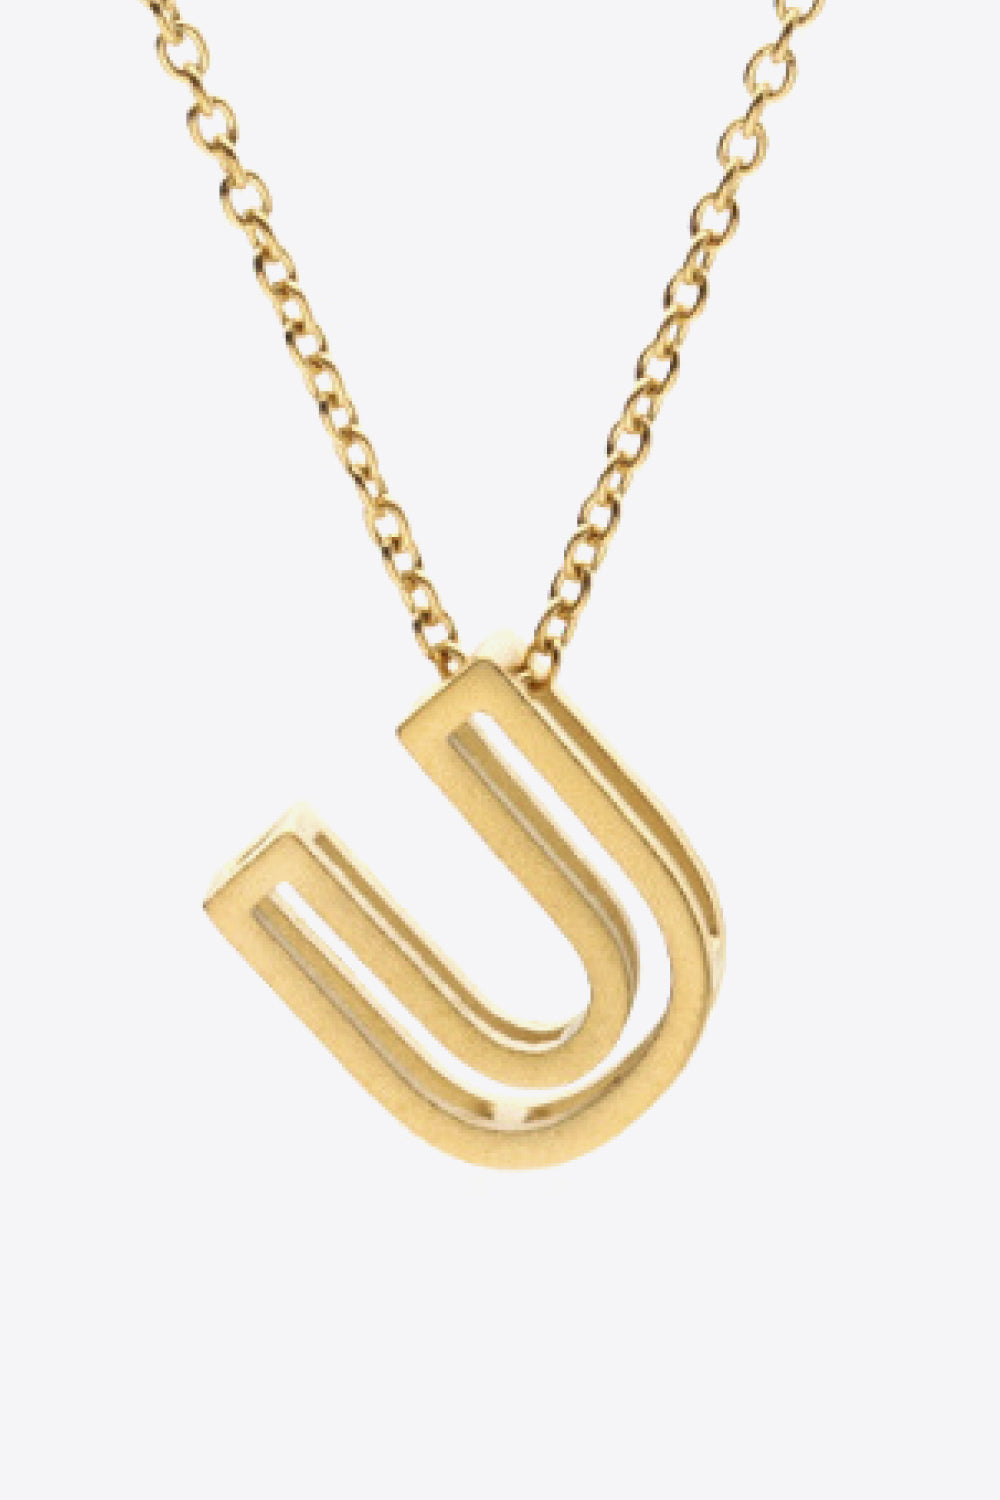 U to Z Letter Pendant Necklace